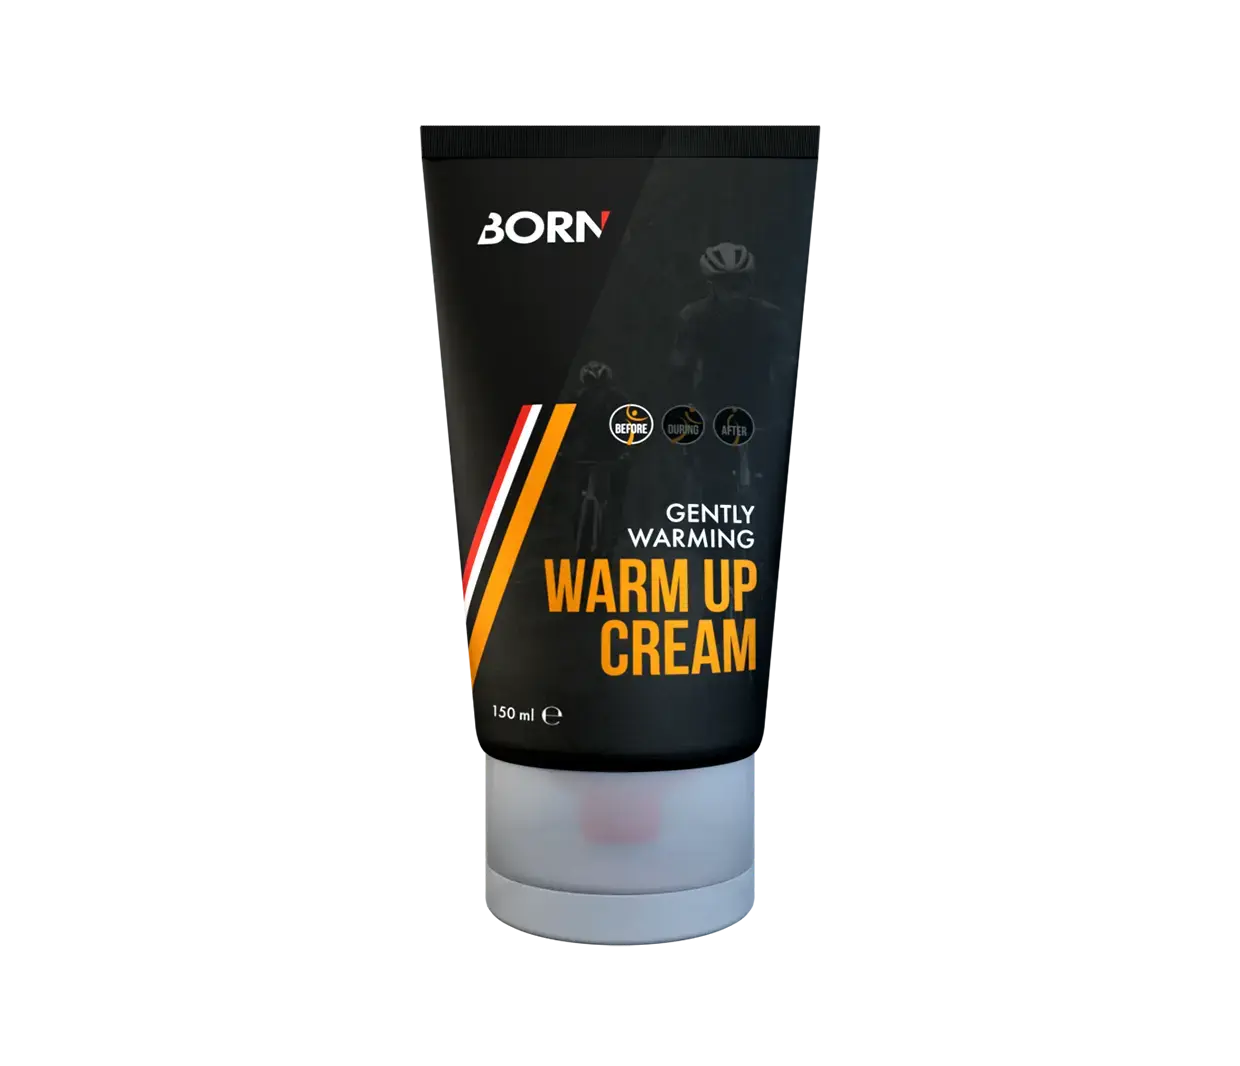 BORN Warm Up Crème